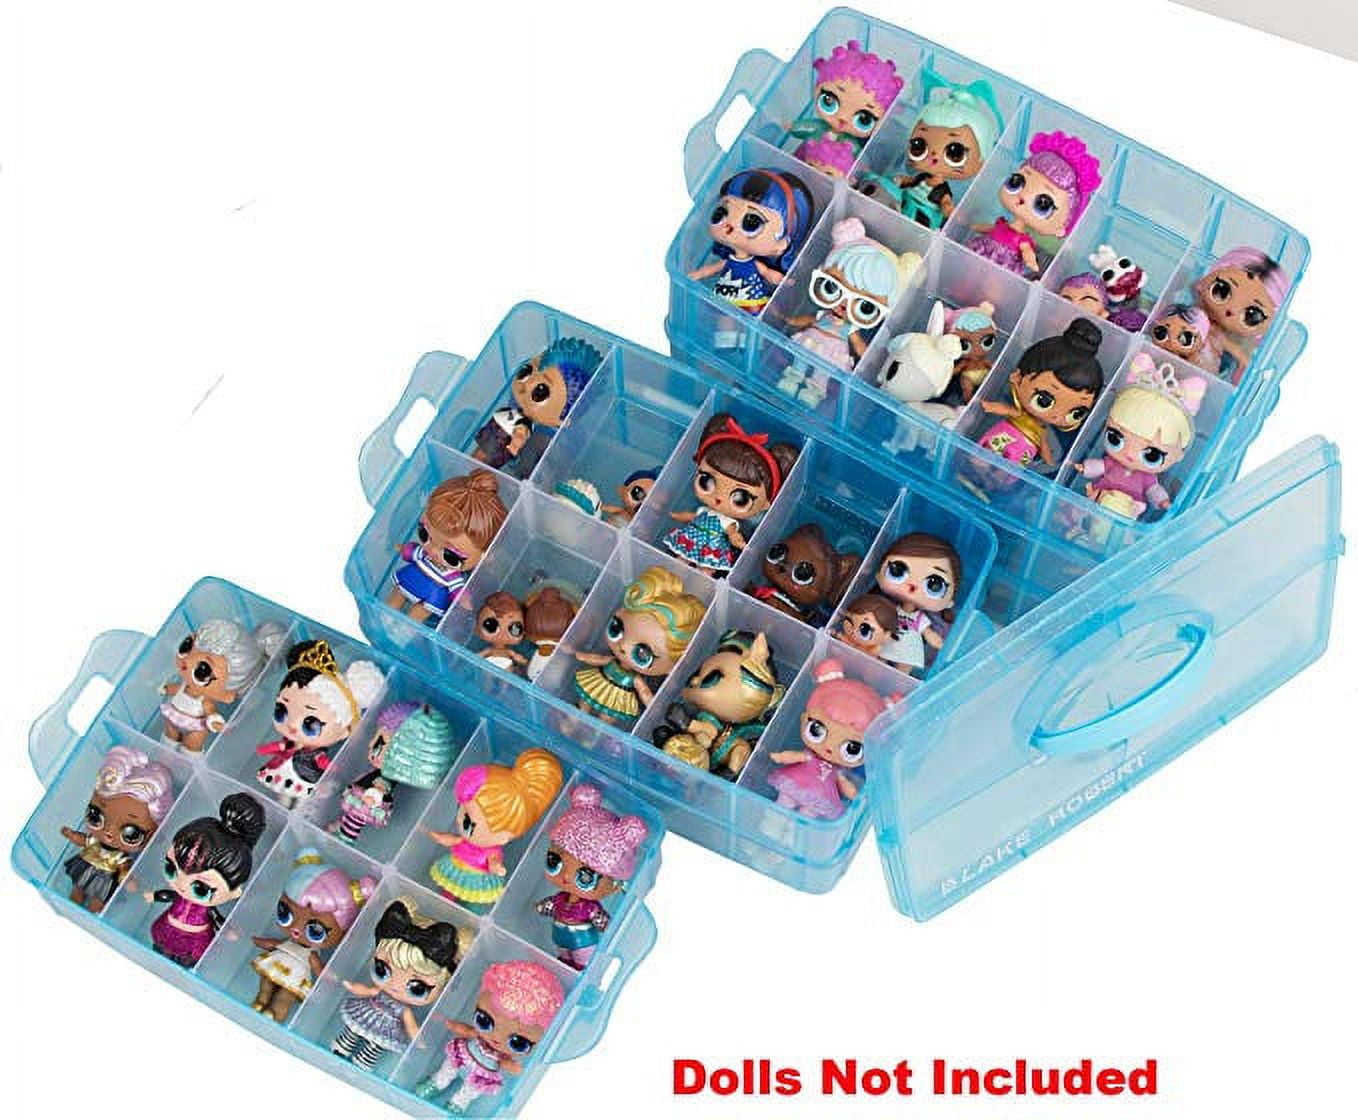 LOL Surprise Doll Storage - Sterilite box from Target